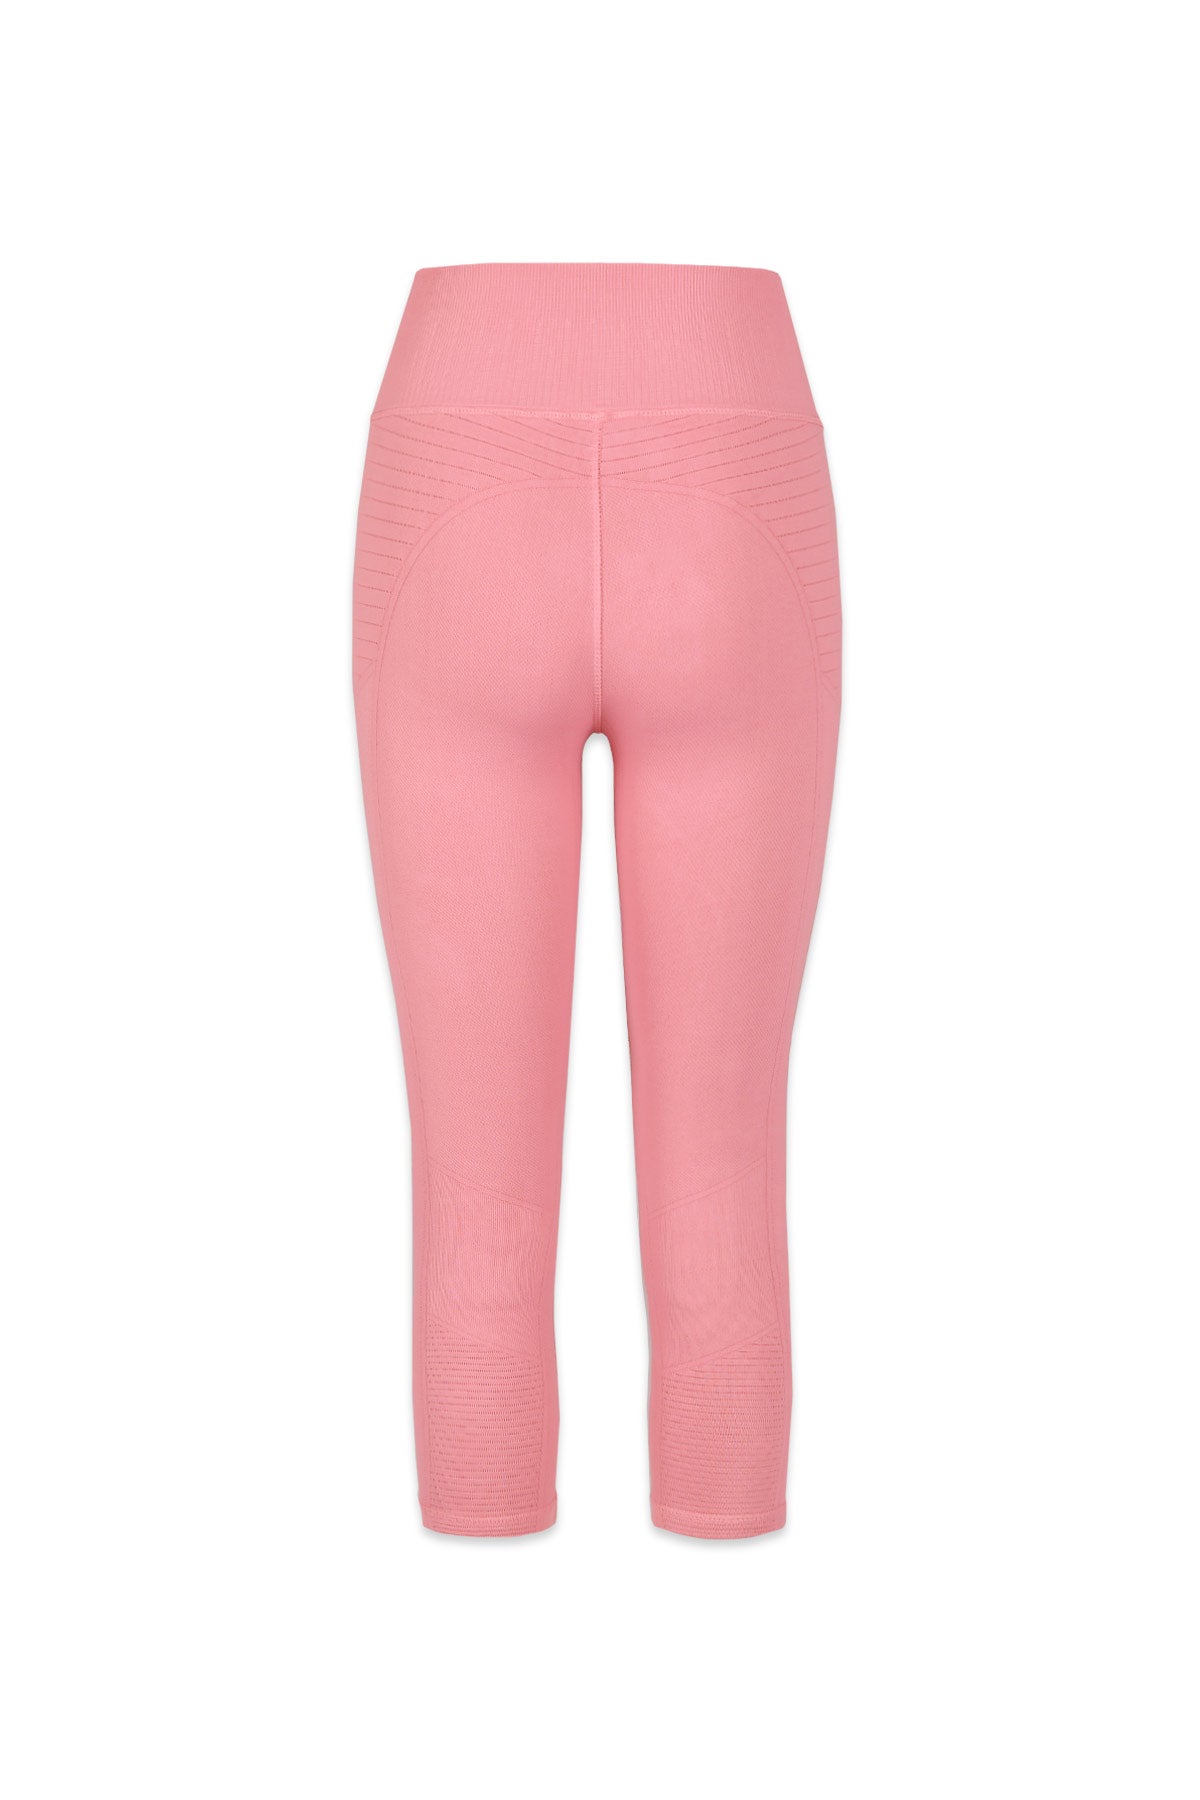 Alo Yoga High-Waist Moto Legging - Macaron Pink - Size XS - Nylon Spandex /  Glossy